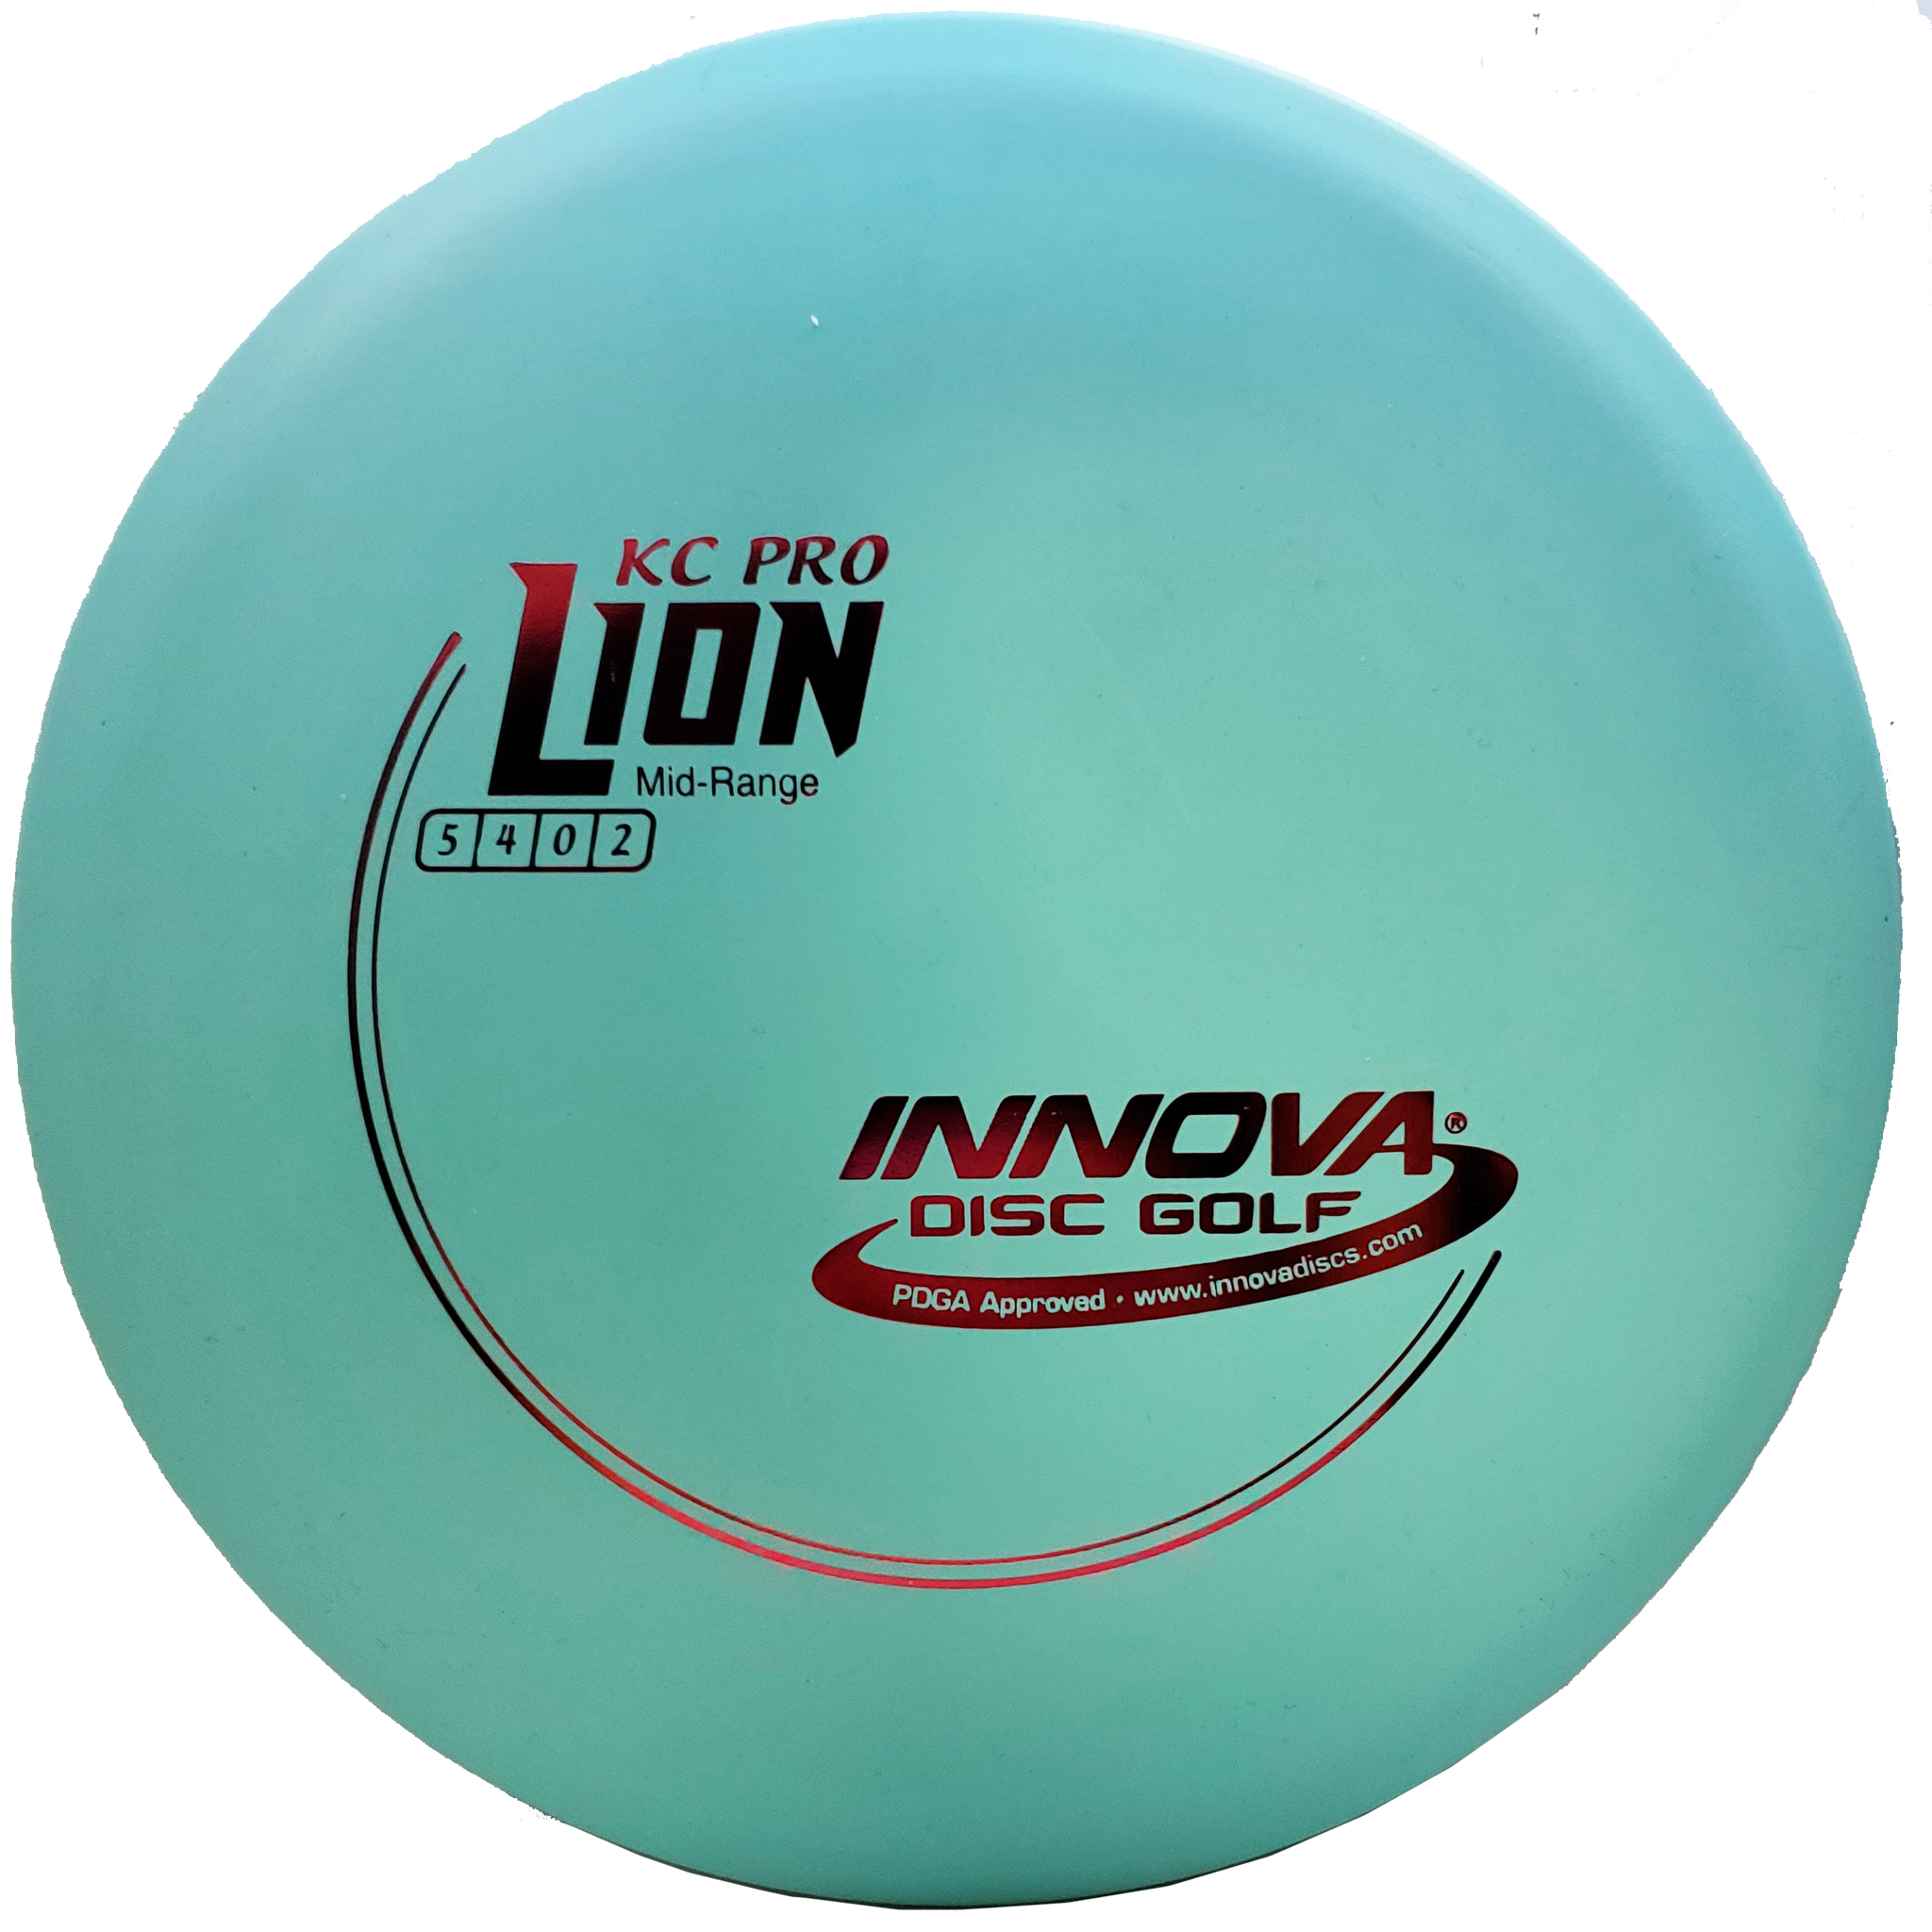 Innova: KC Pro Lion Mid-Range - Teal